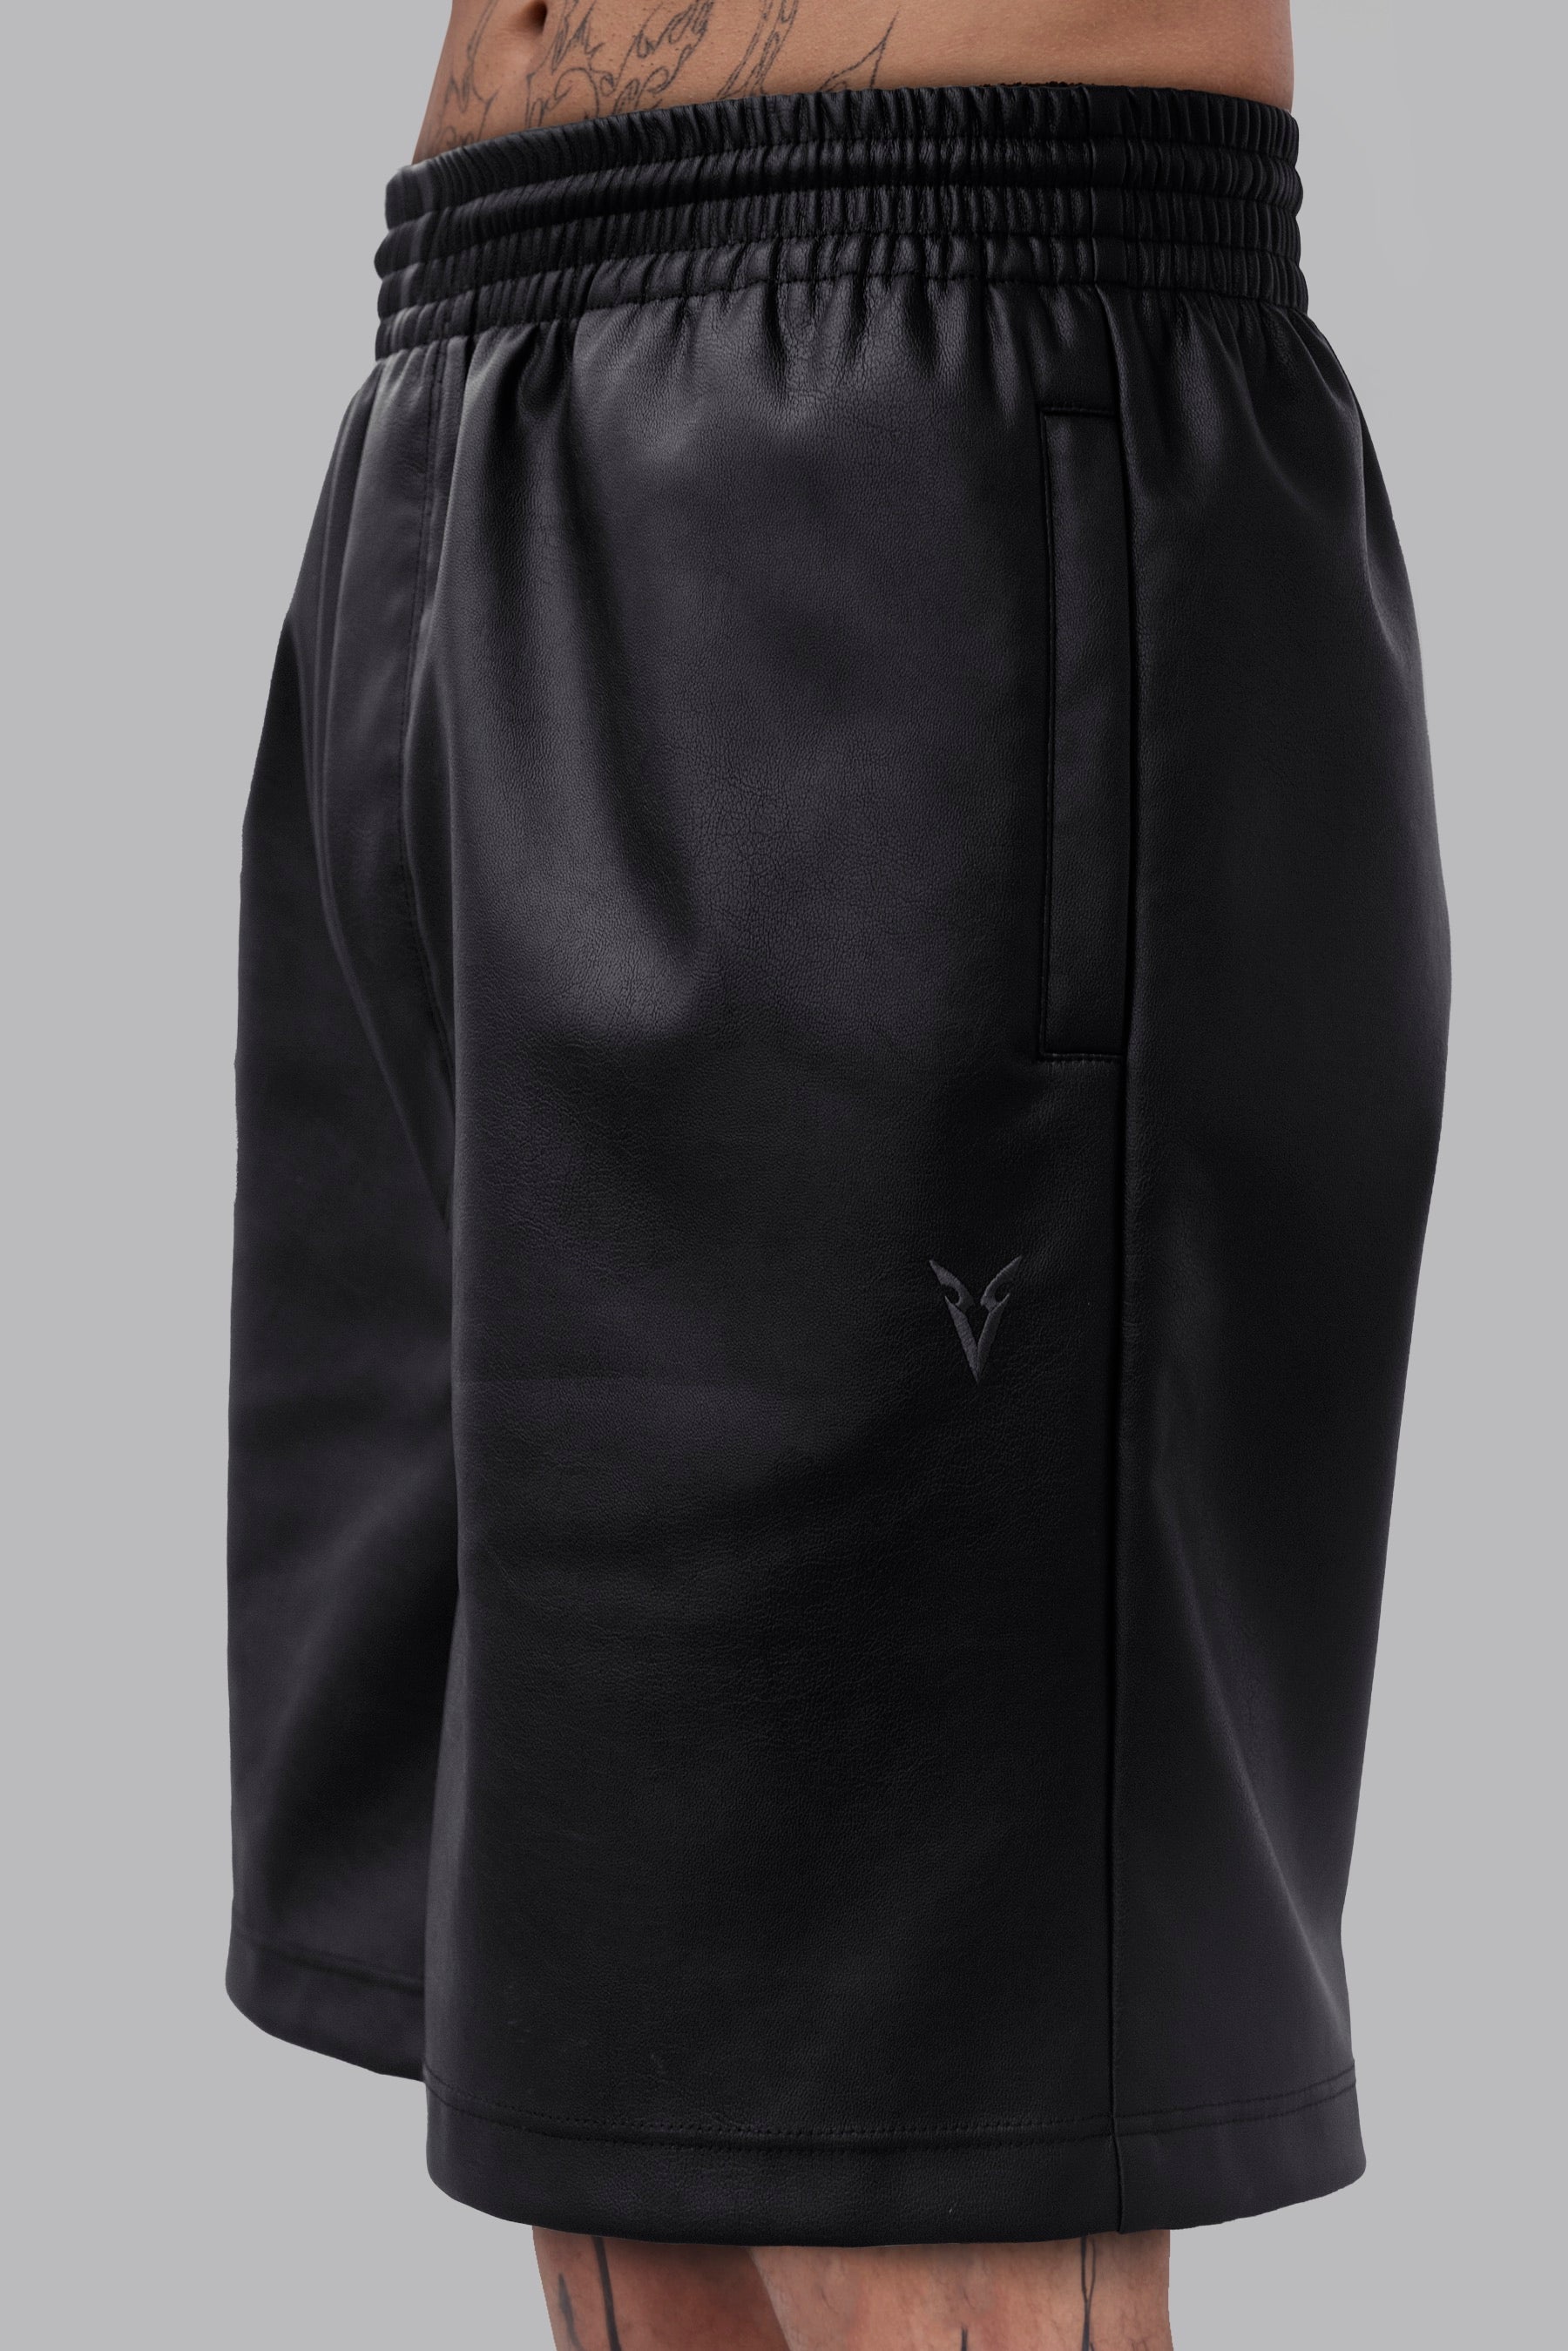 Vegan Leather Shorts - Black